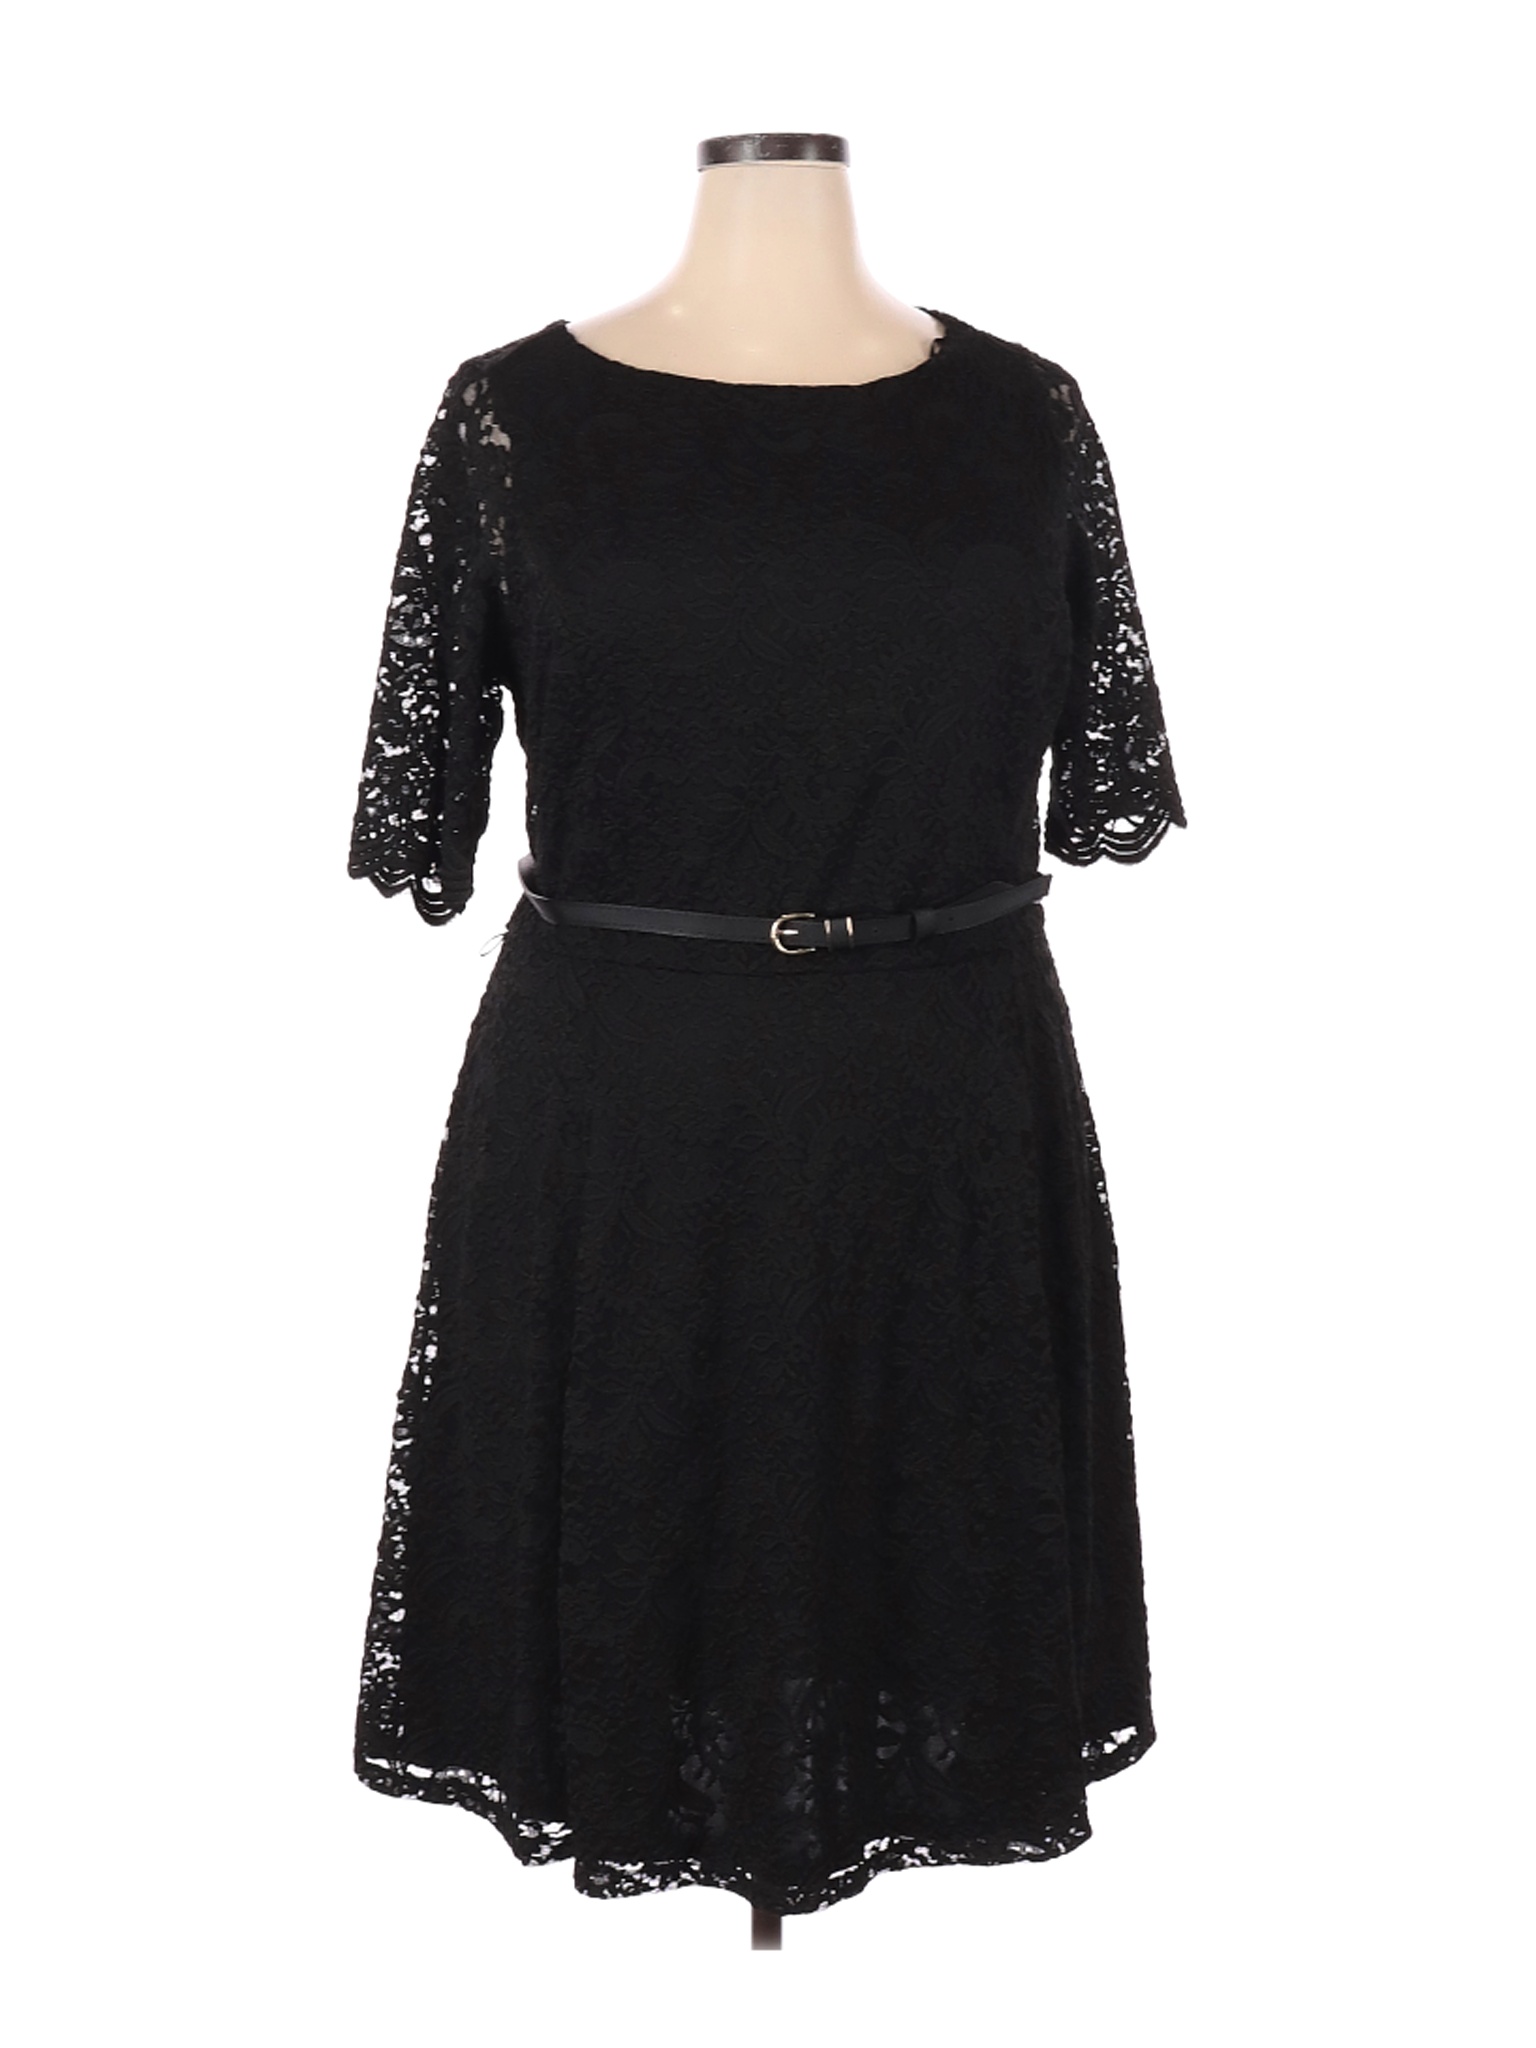 NWT Charter Club Women Black Cocktail Dress 2X Plus | eBay